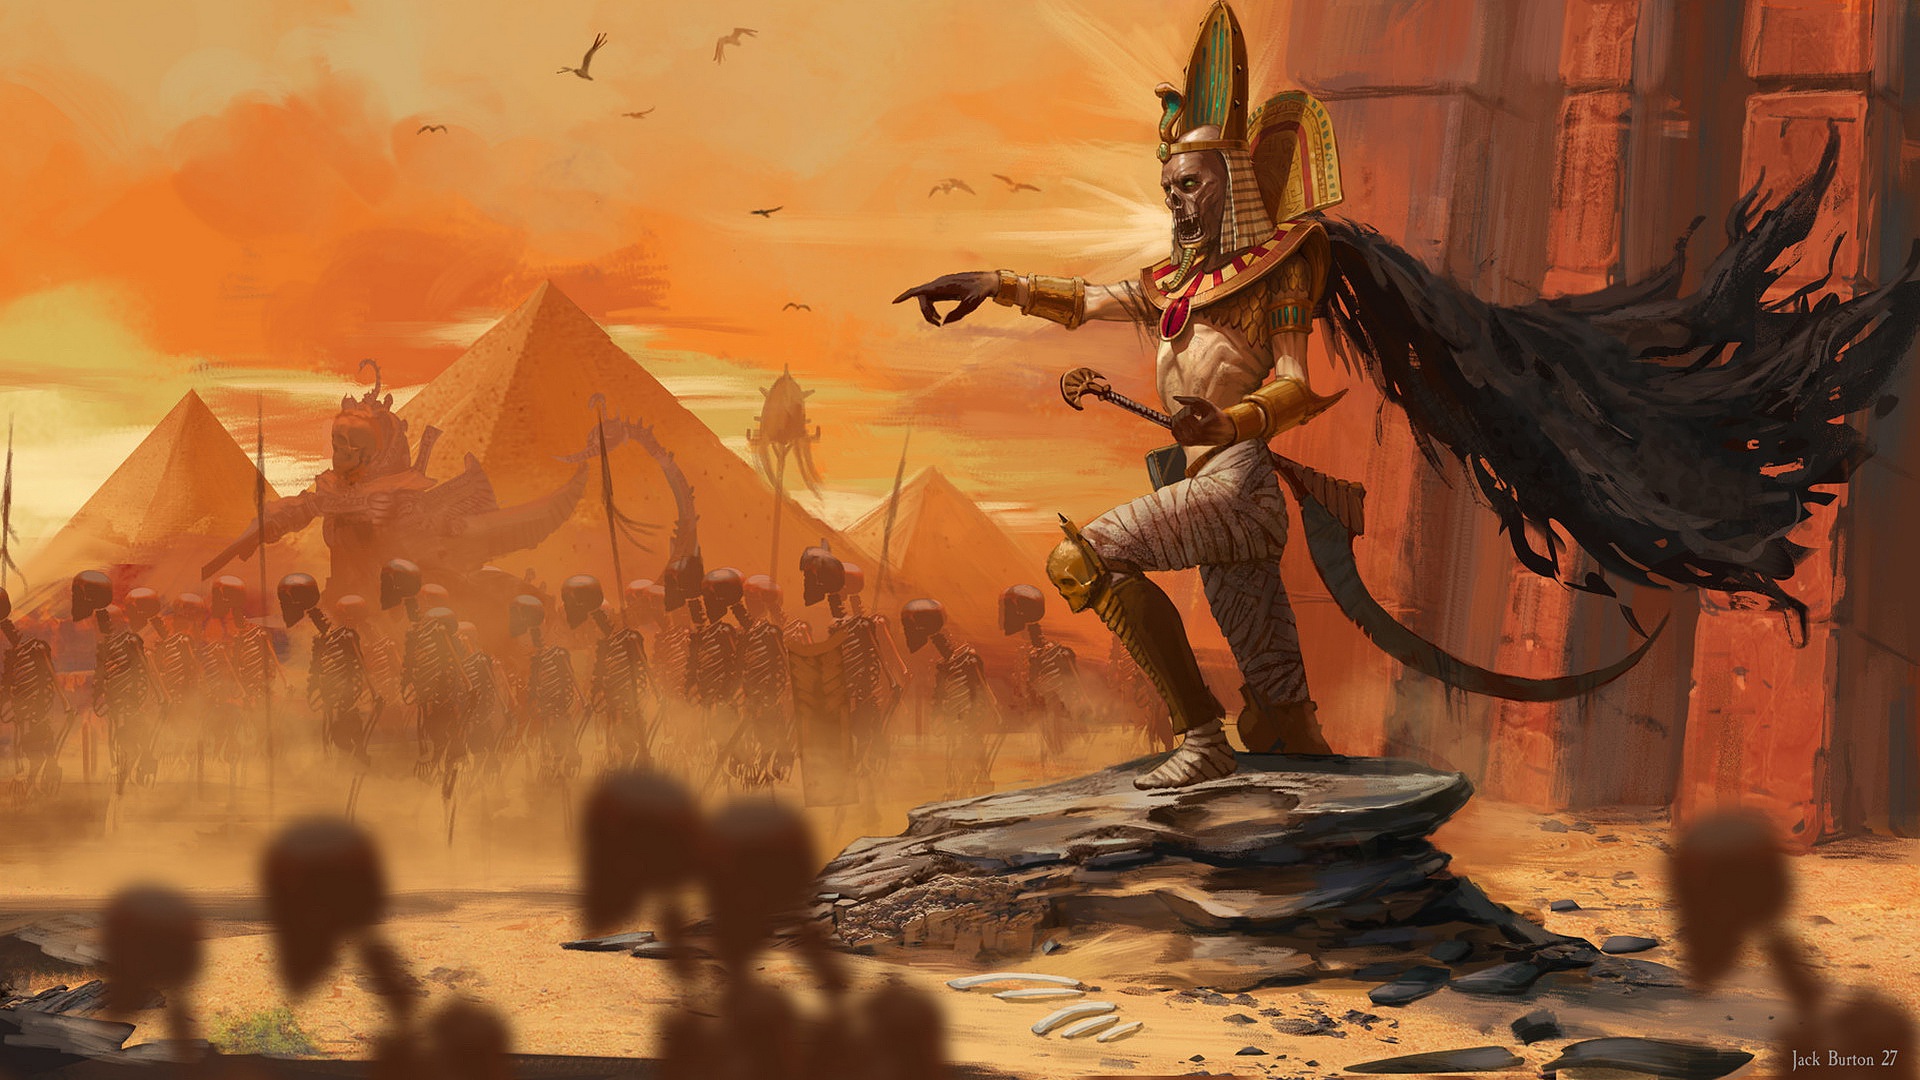 warhammer total war wallpaper,cg artwork,action adventure game,dragon,mythology,fictional character